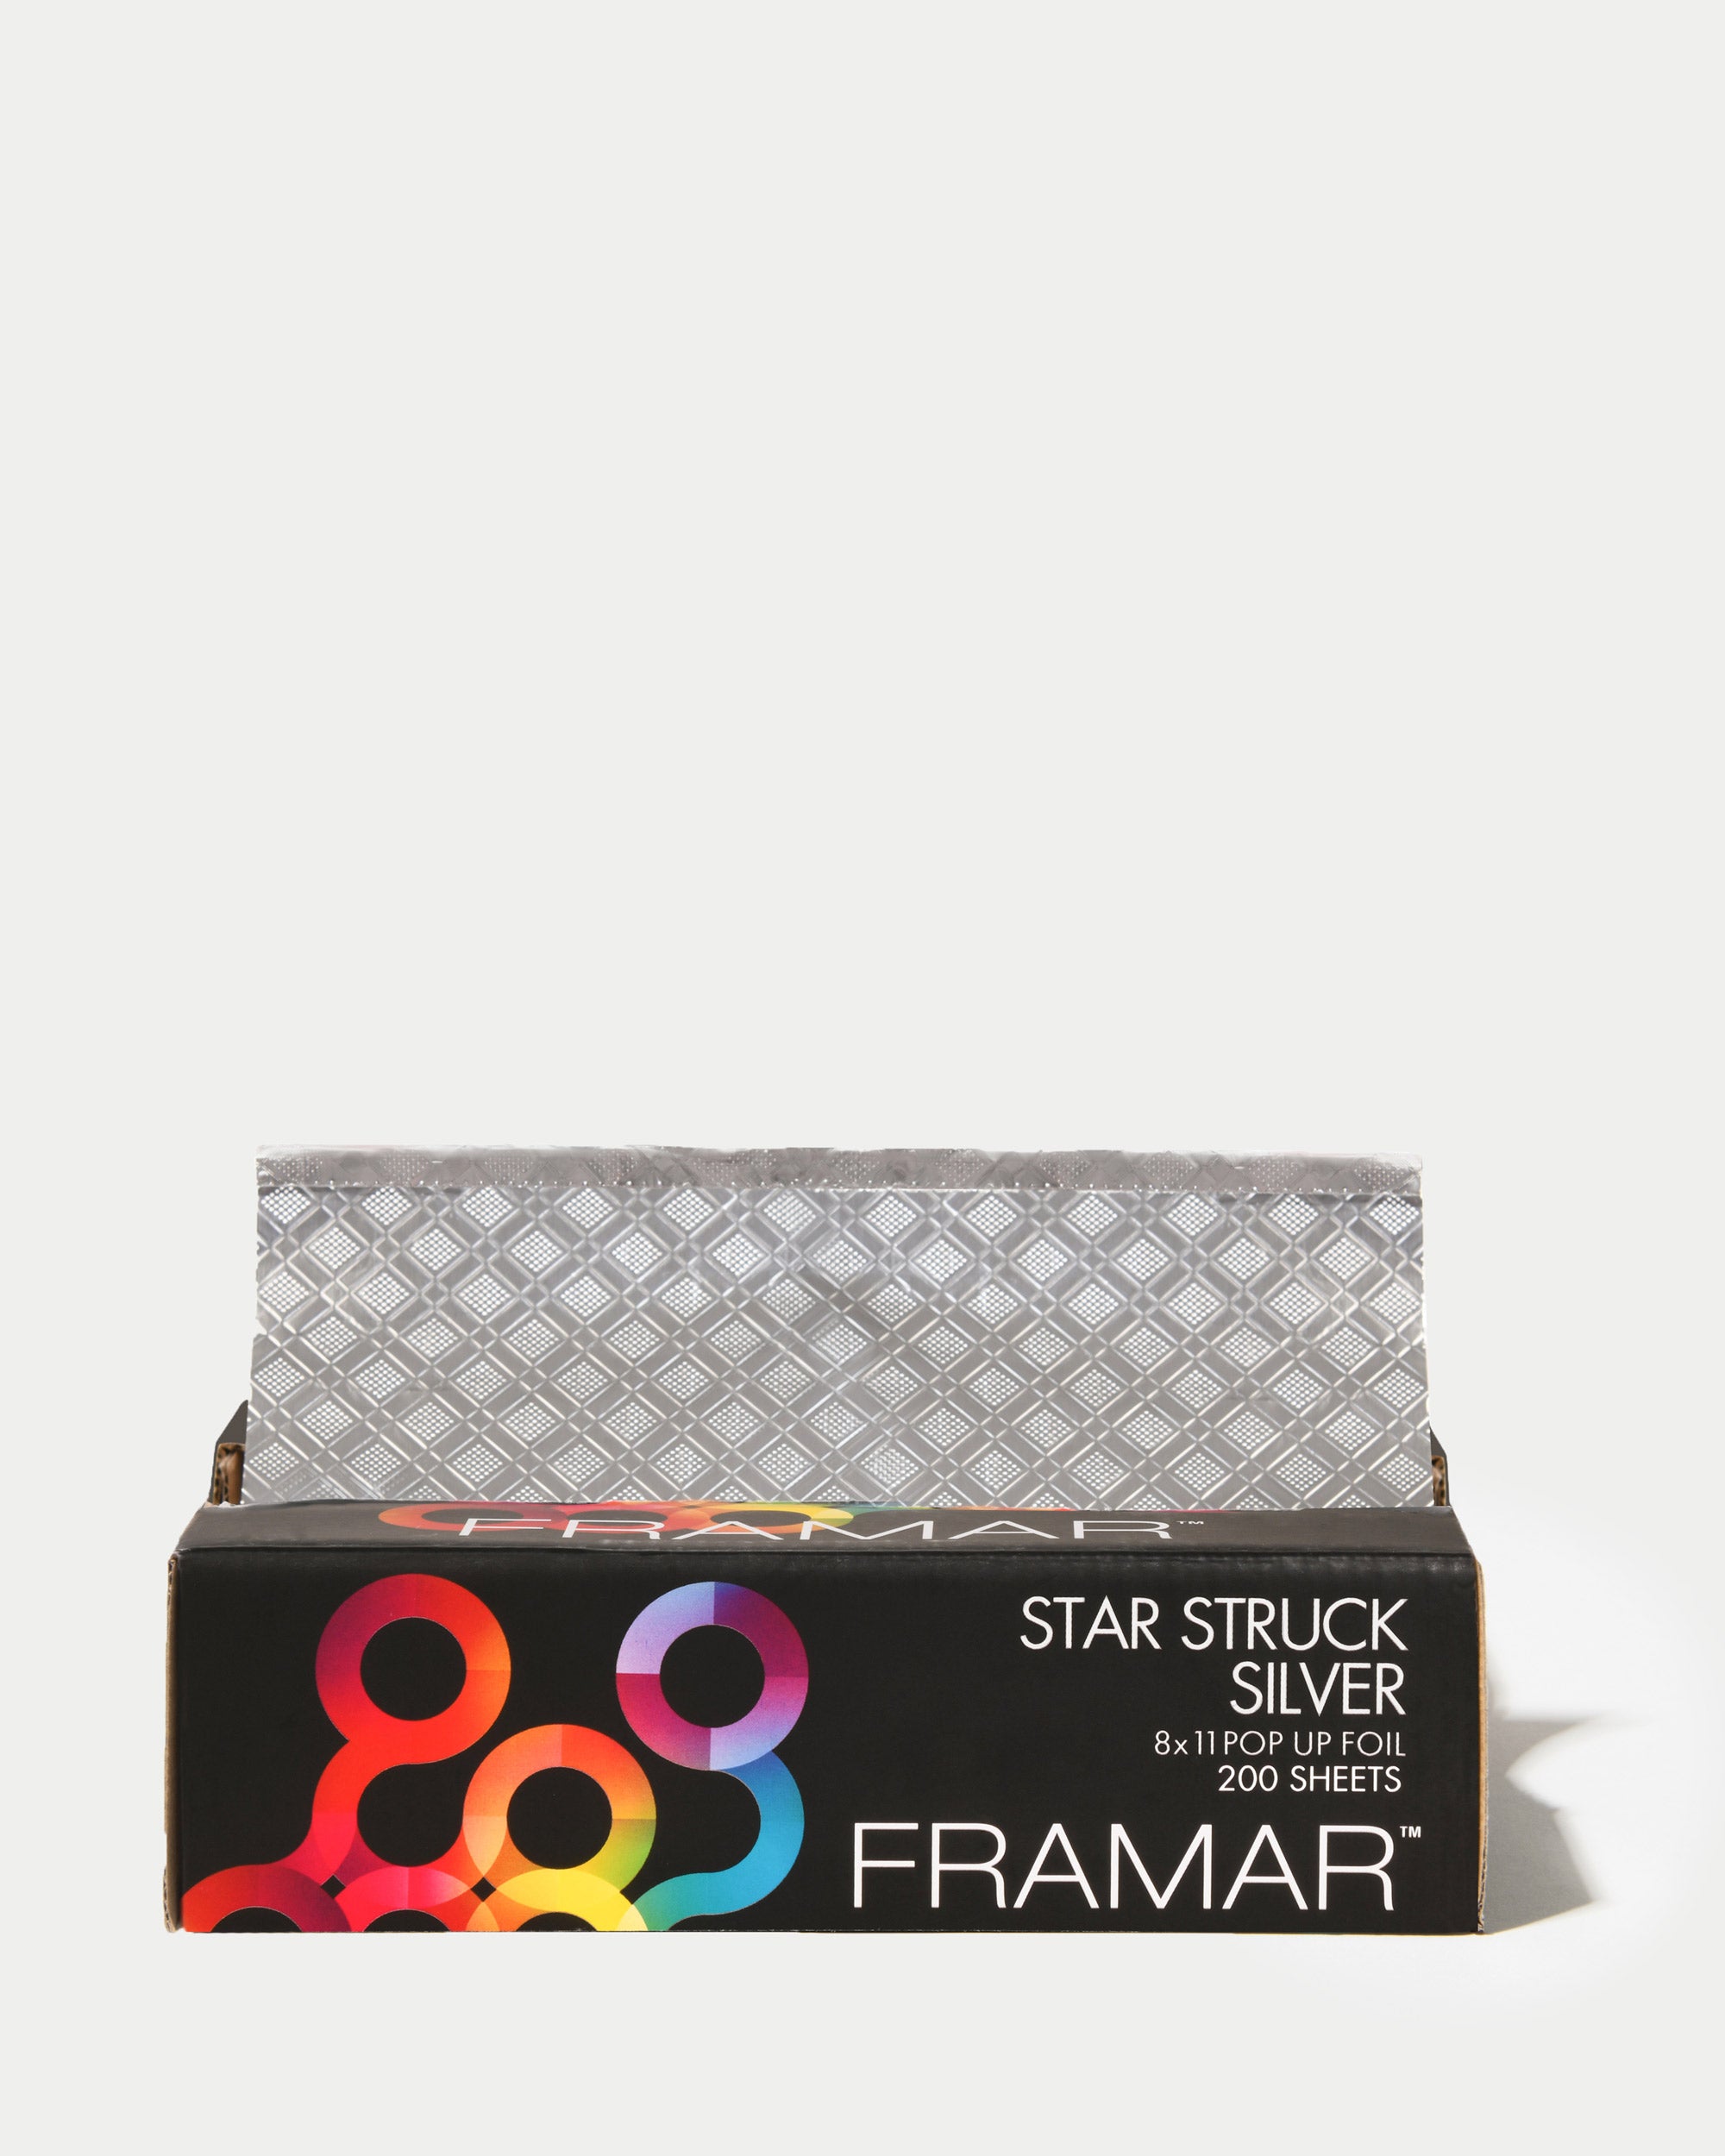 Framar Star Struck Silver Pop Up Hair Foil - Framar Family Hair